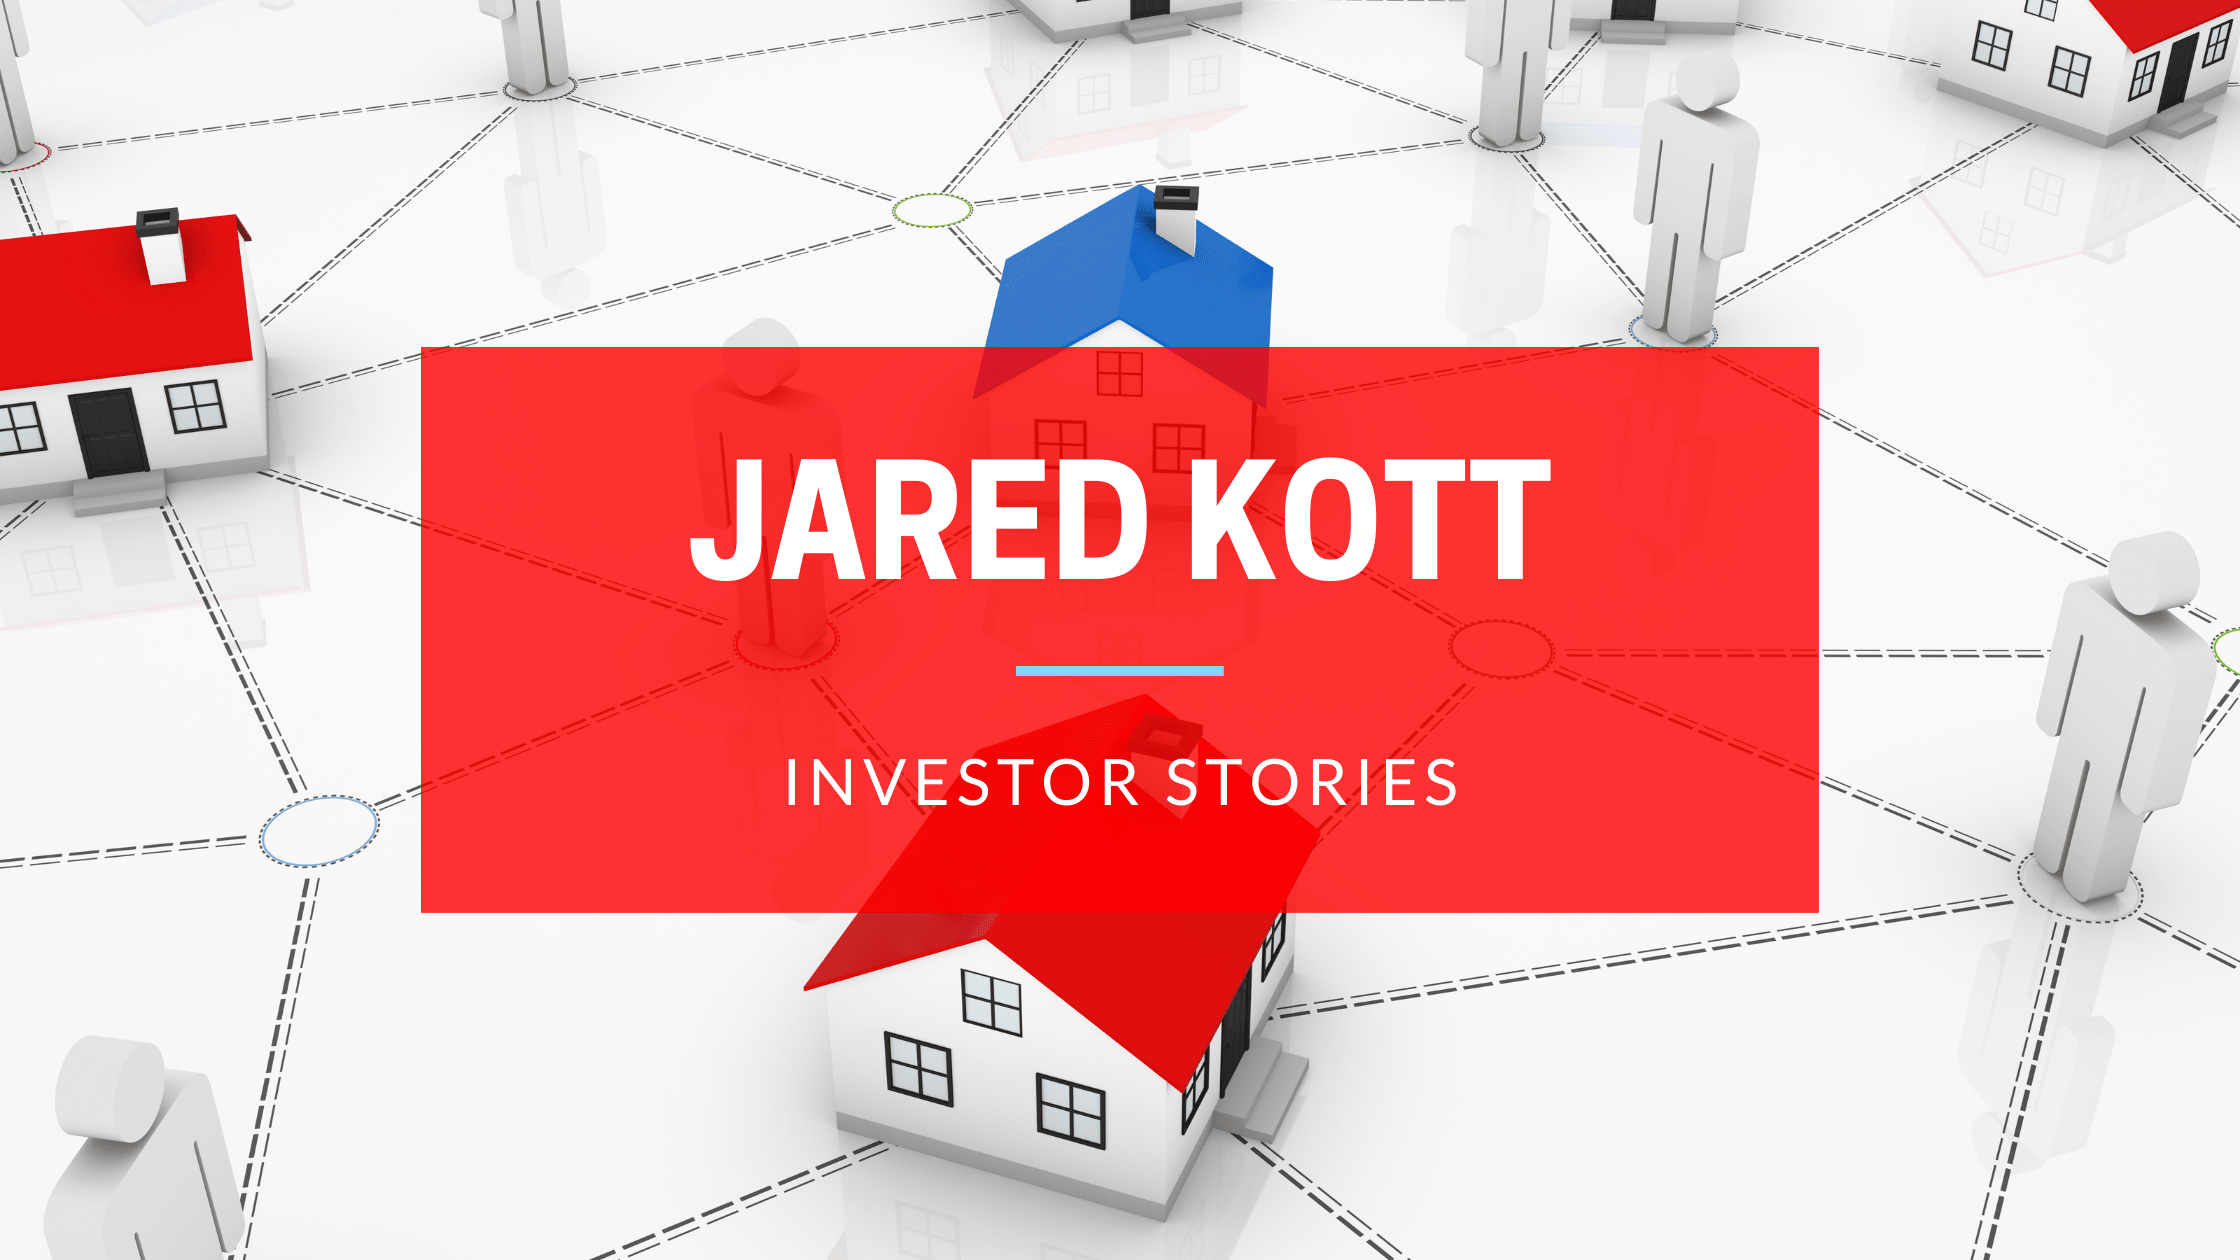 Investor Stories Featuring Jared Kott